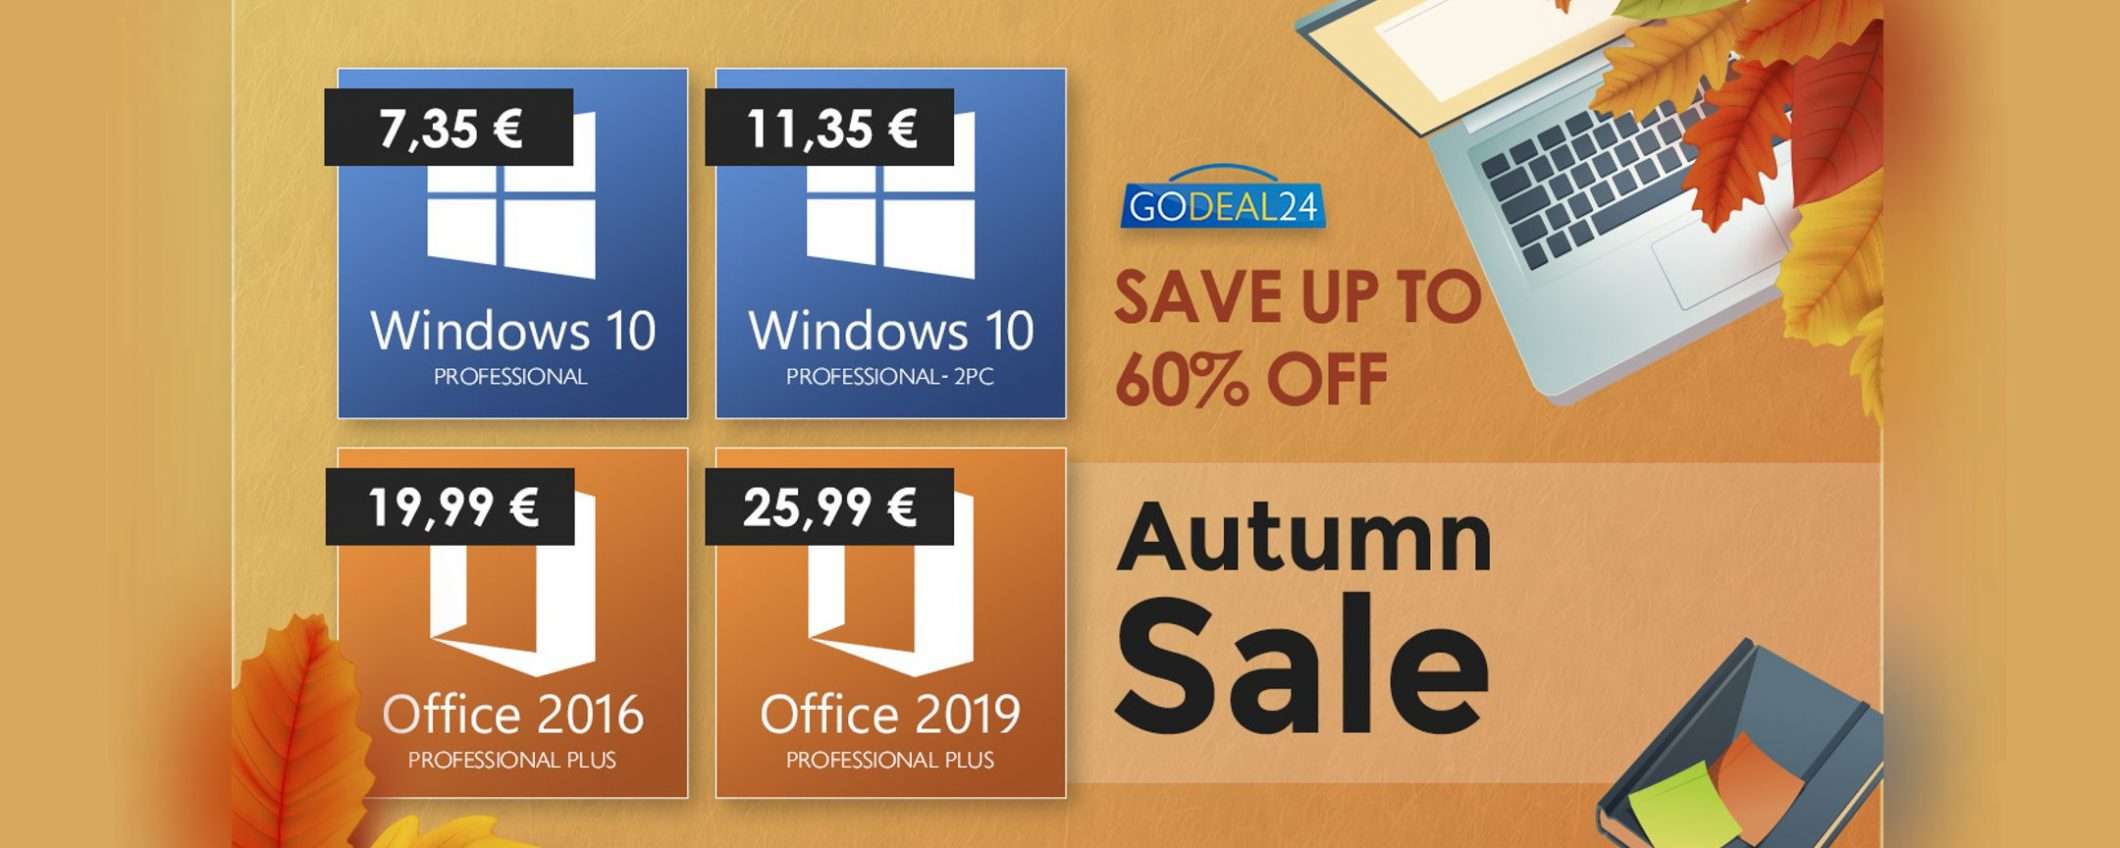 Windows 10 a soli 7,35€ con i saldi autunnali GoDeal24.com